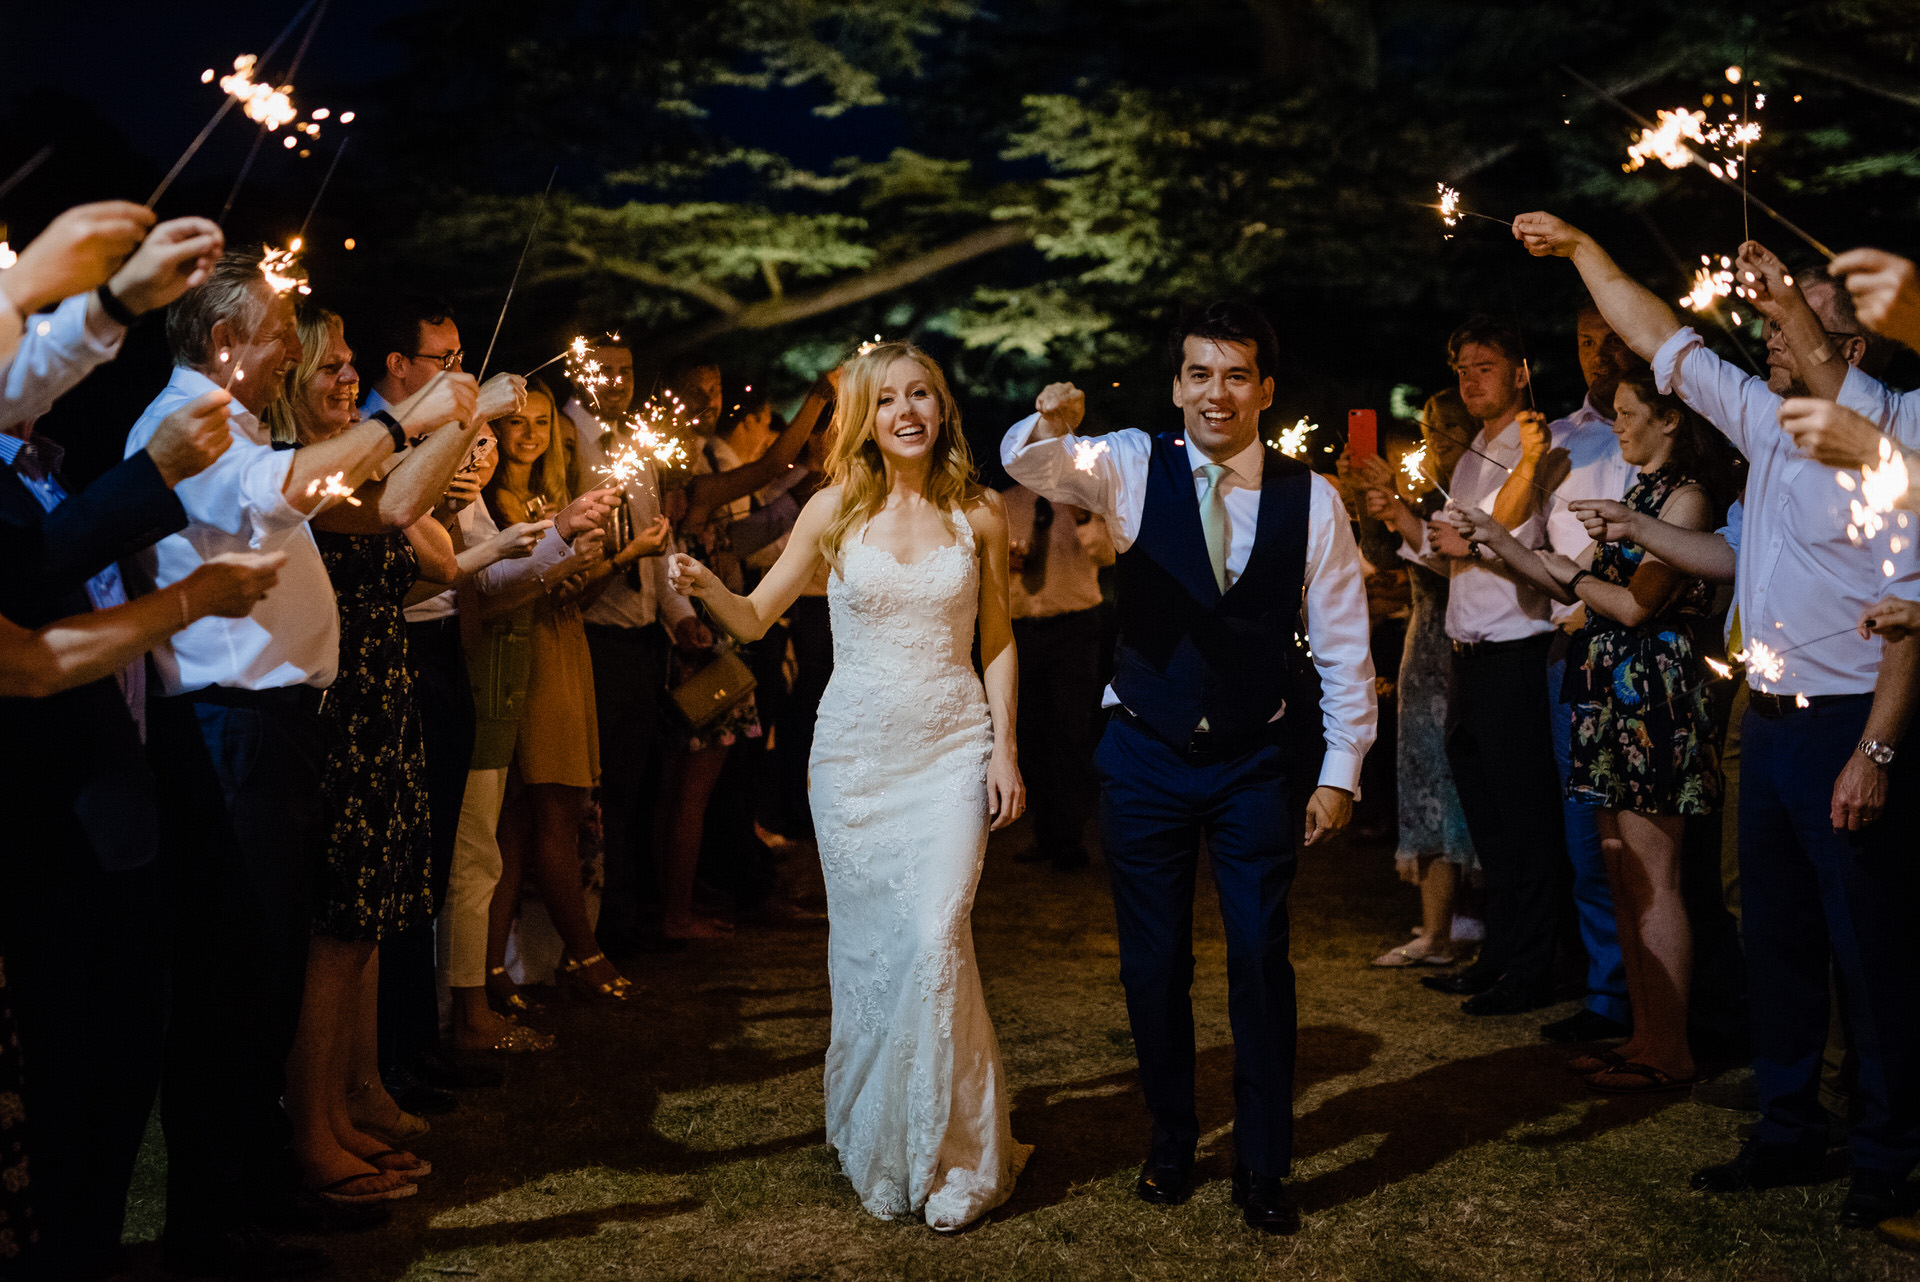 Loseley park wedding sparklers